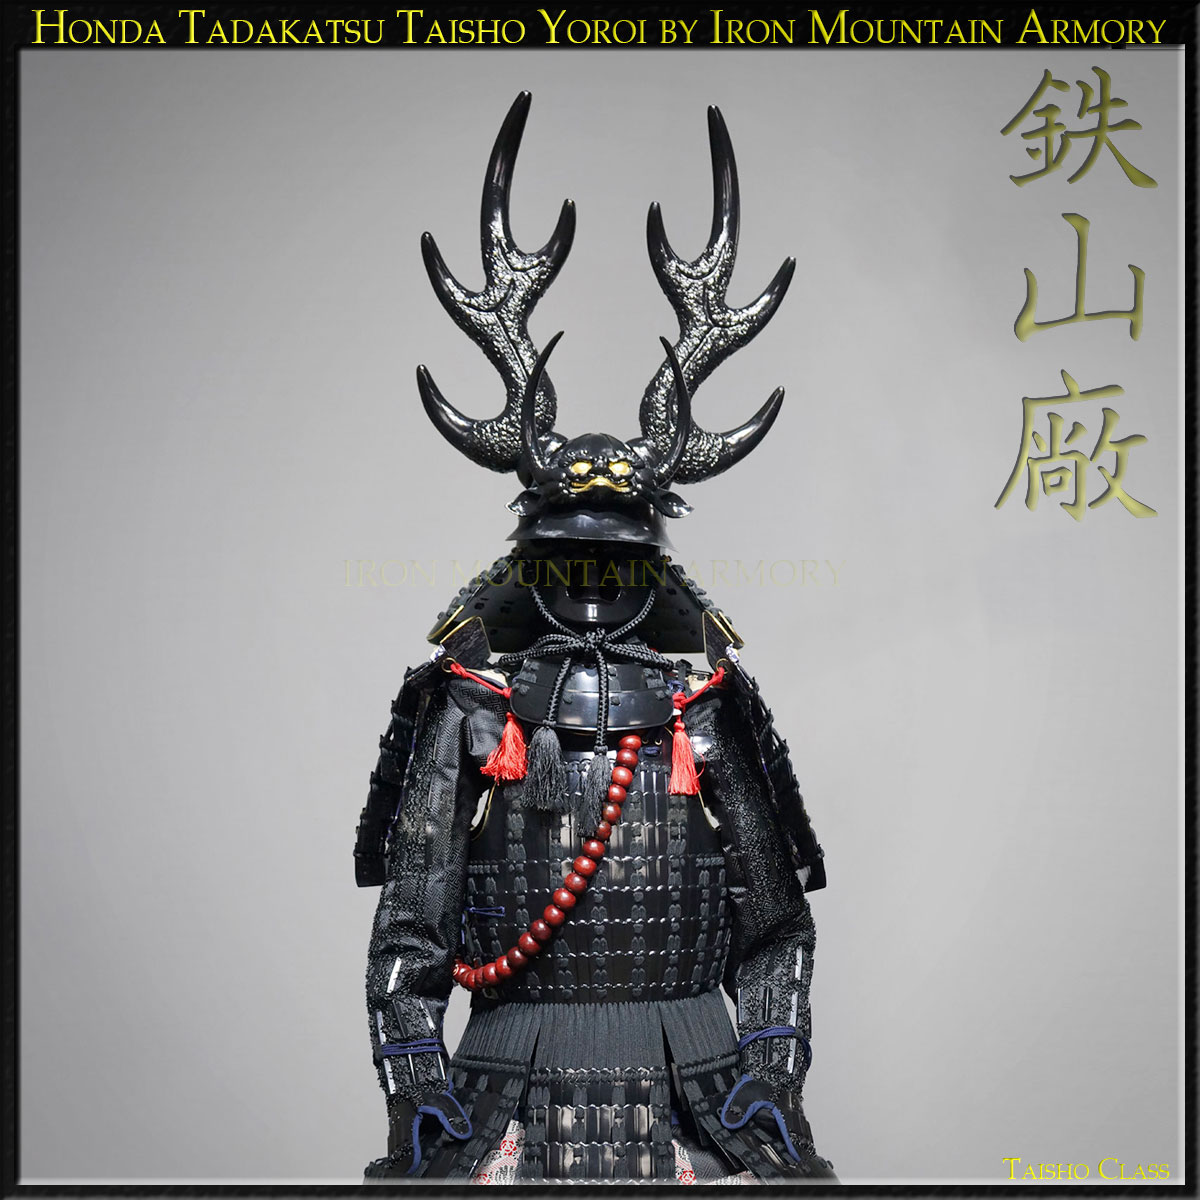 Honda Tadakatsu Taisho Yoroi by Iron Mountain Armory